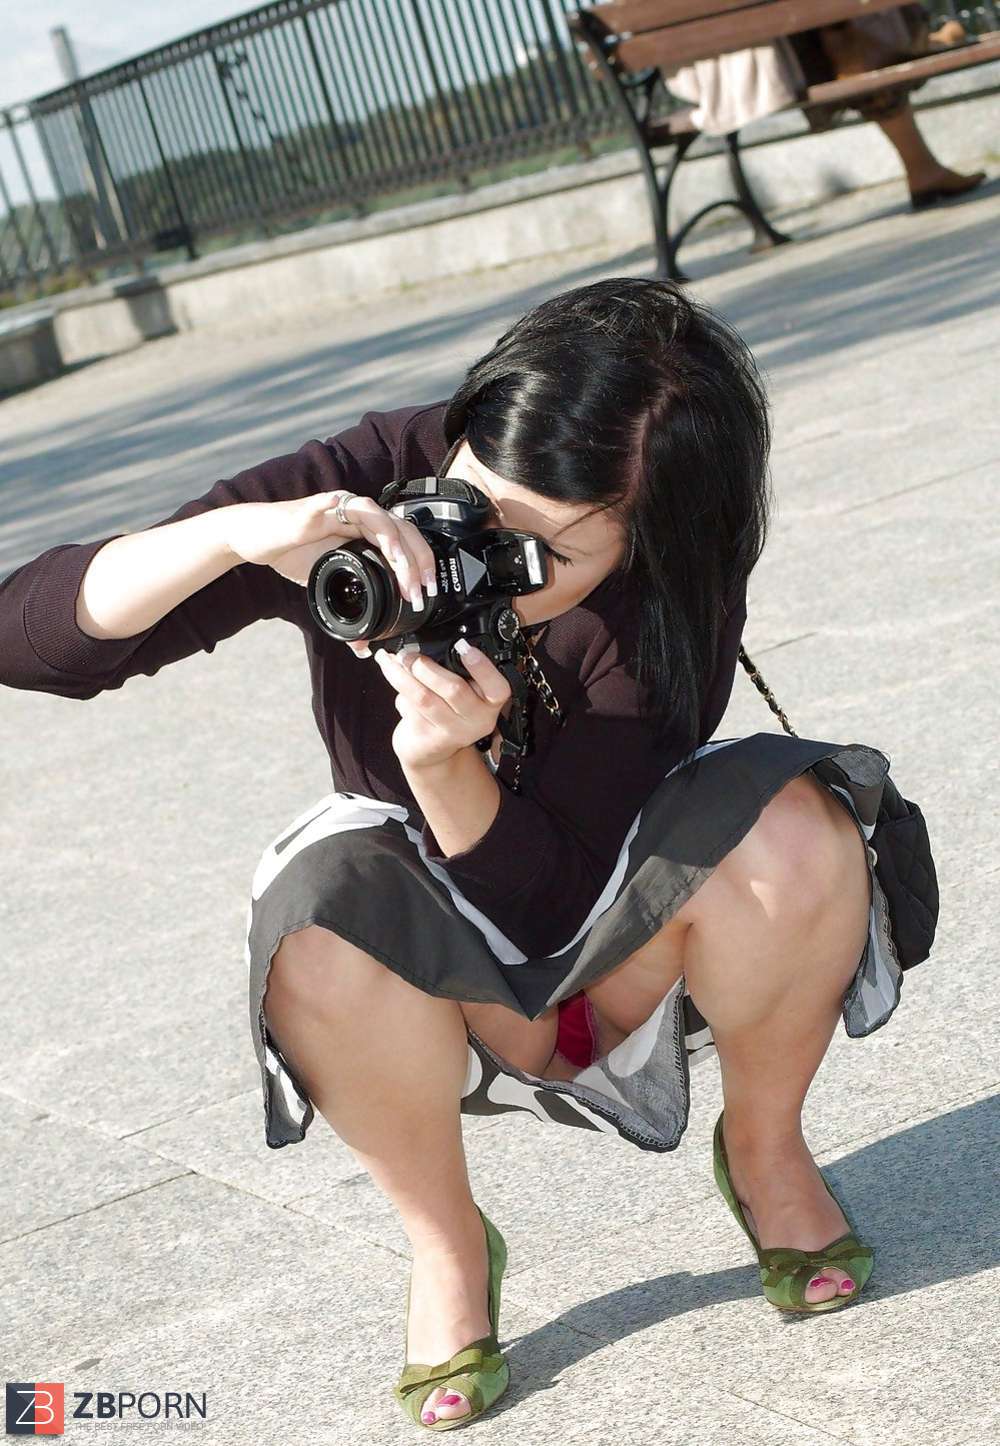 Колготки и чулки - Апскирт фотогалерея - upskirt, частное фото под юбкой, подглядывание под юбку